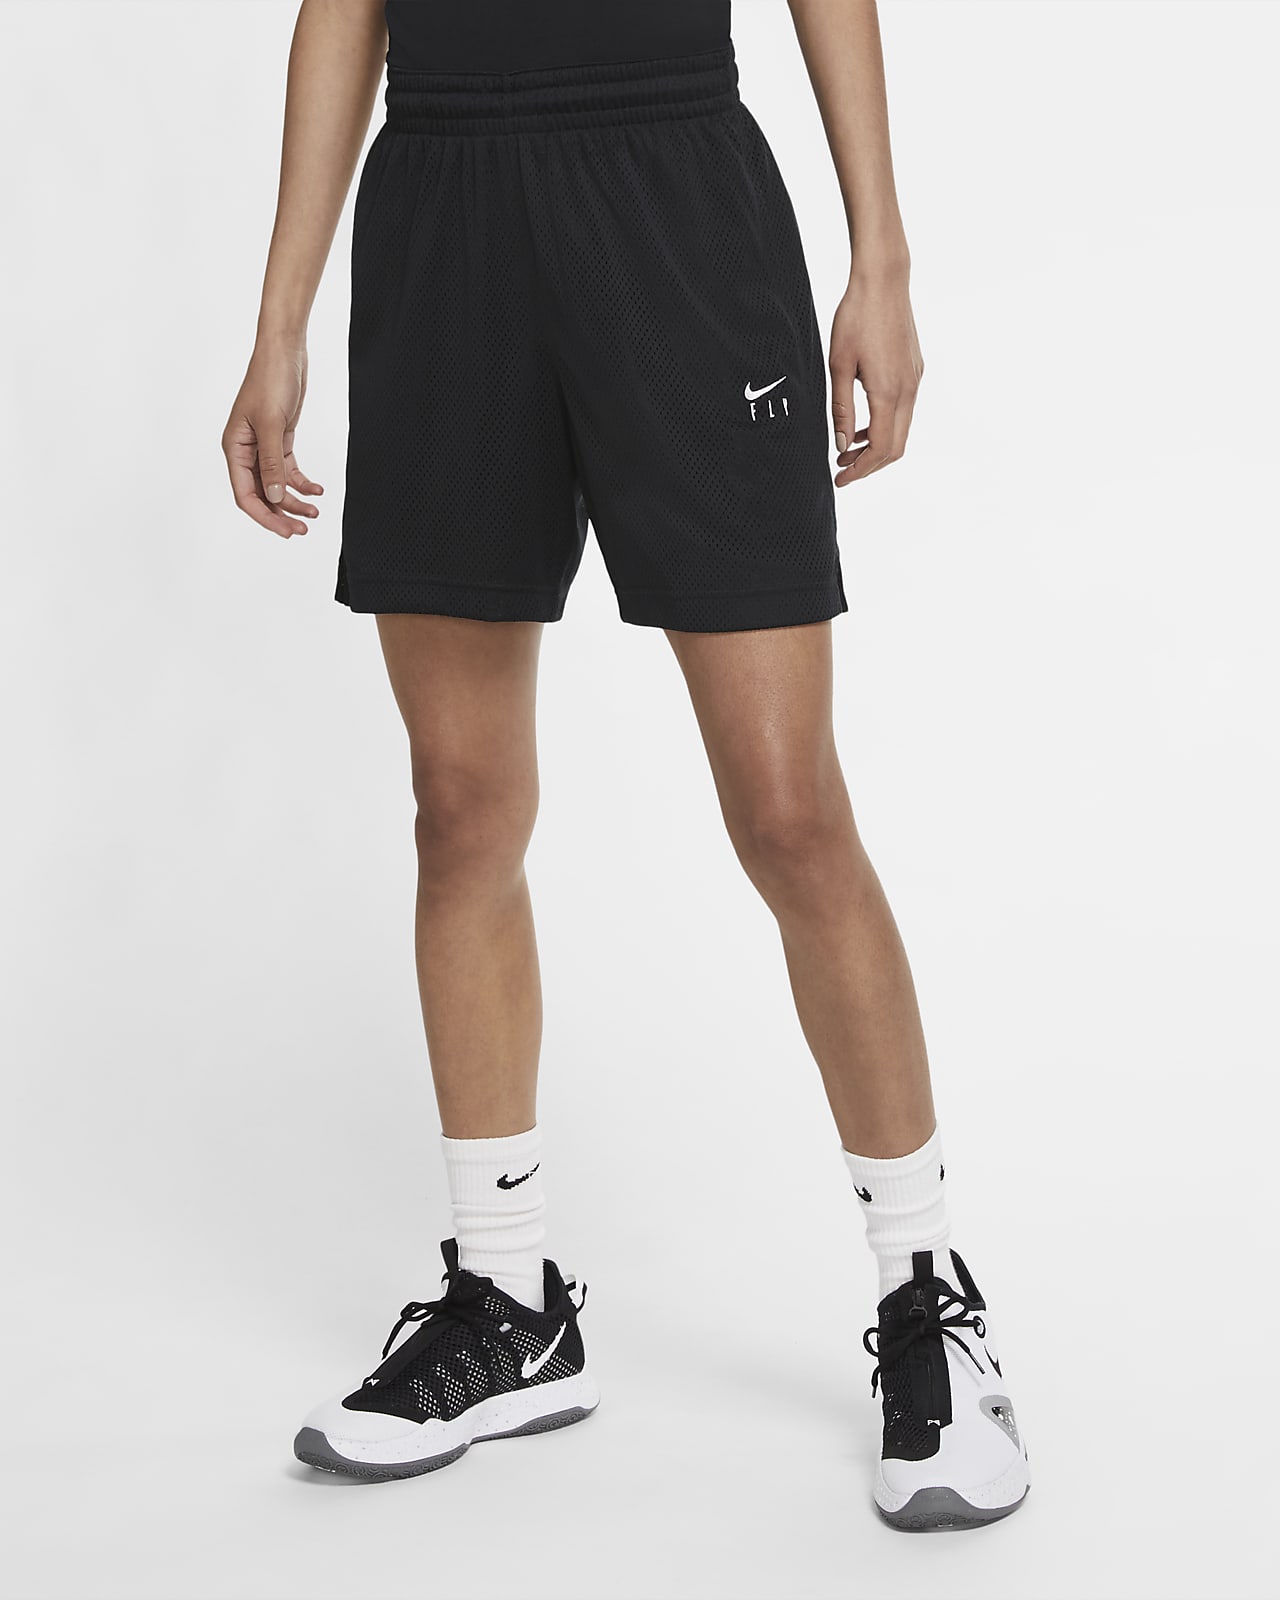 basketball shorts womens nike